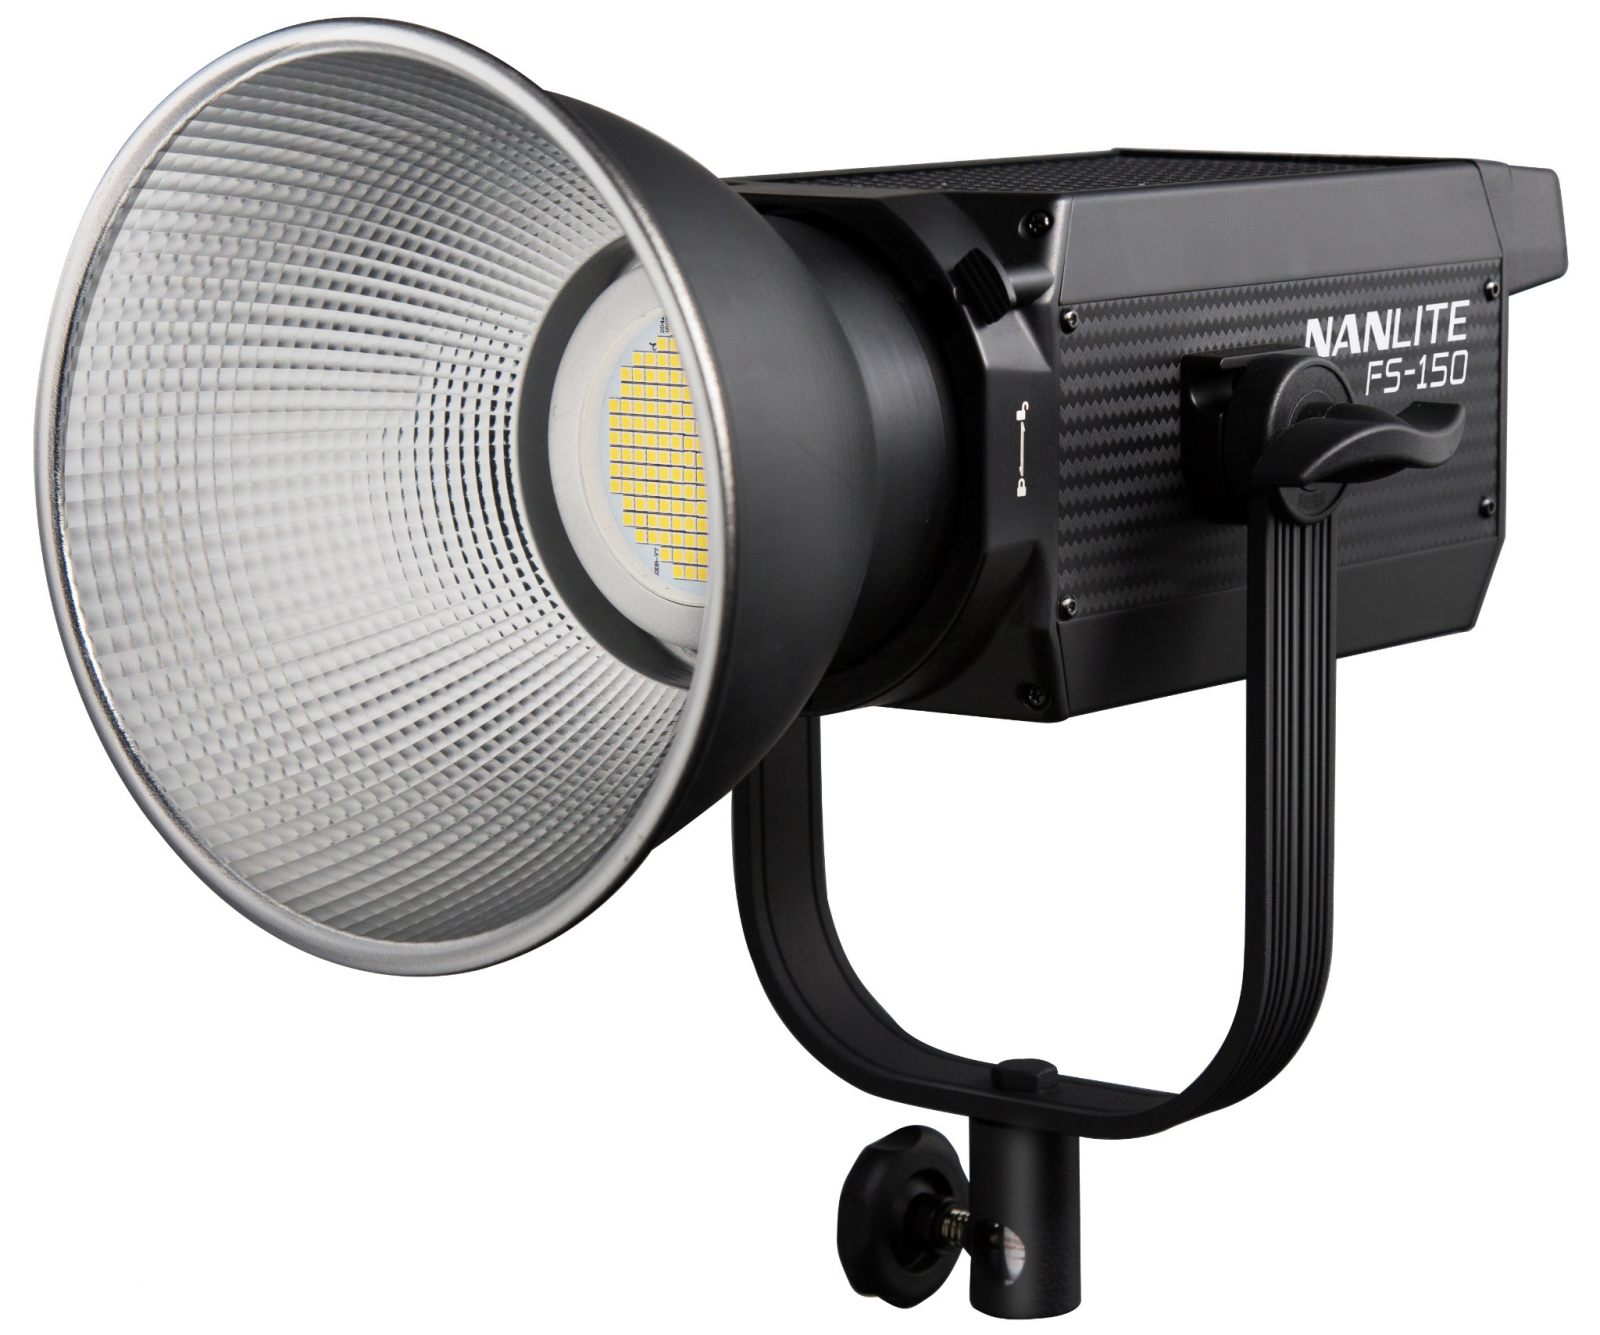 KAISER NANLITE LED Studio-Scheinwerfer FS-150